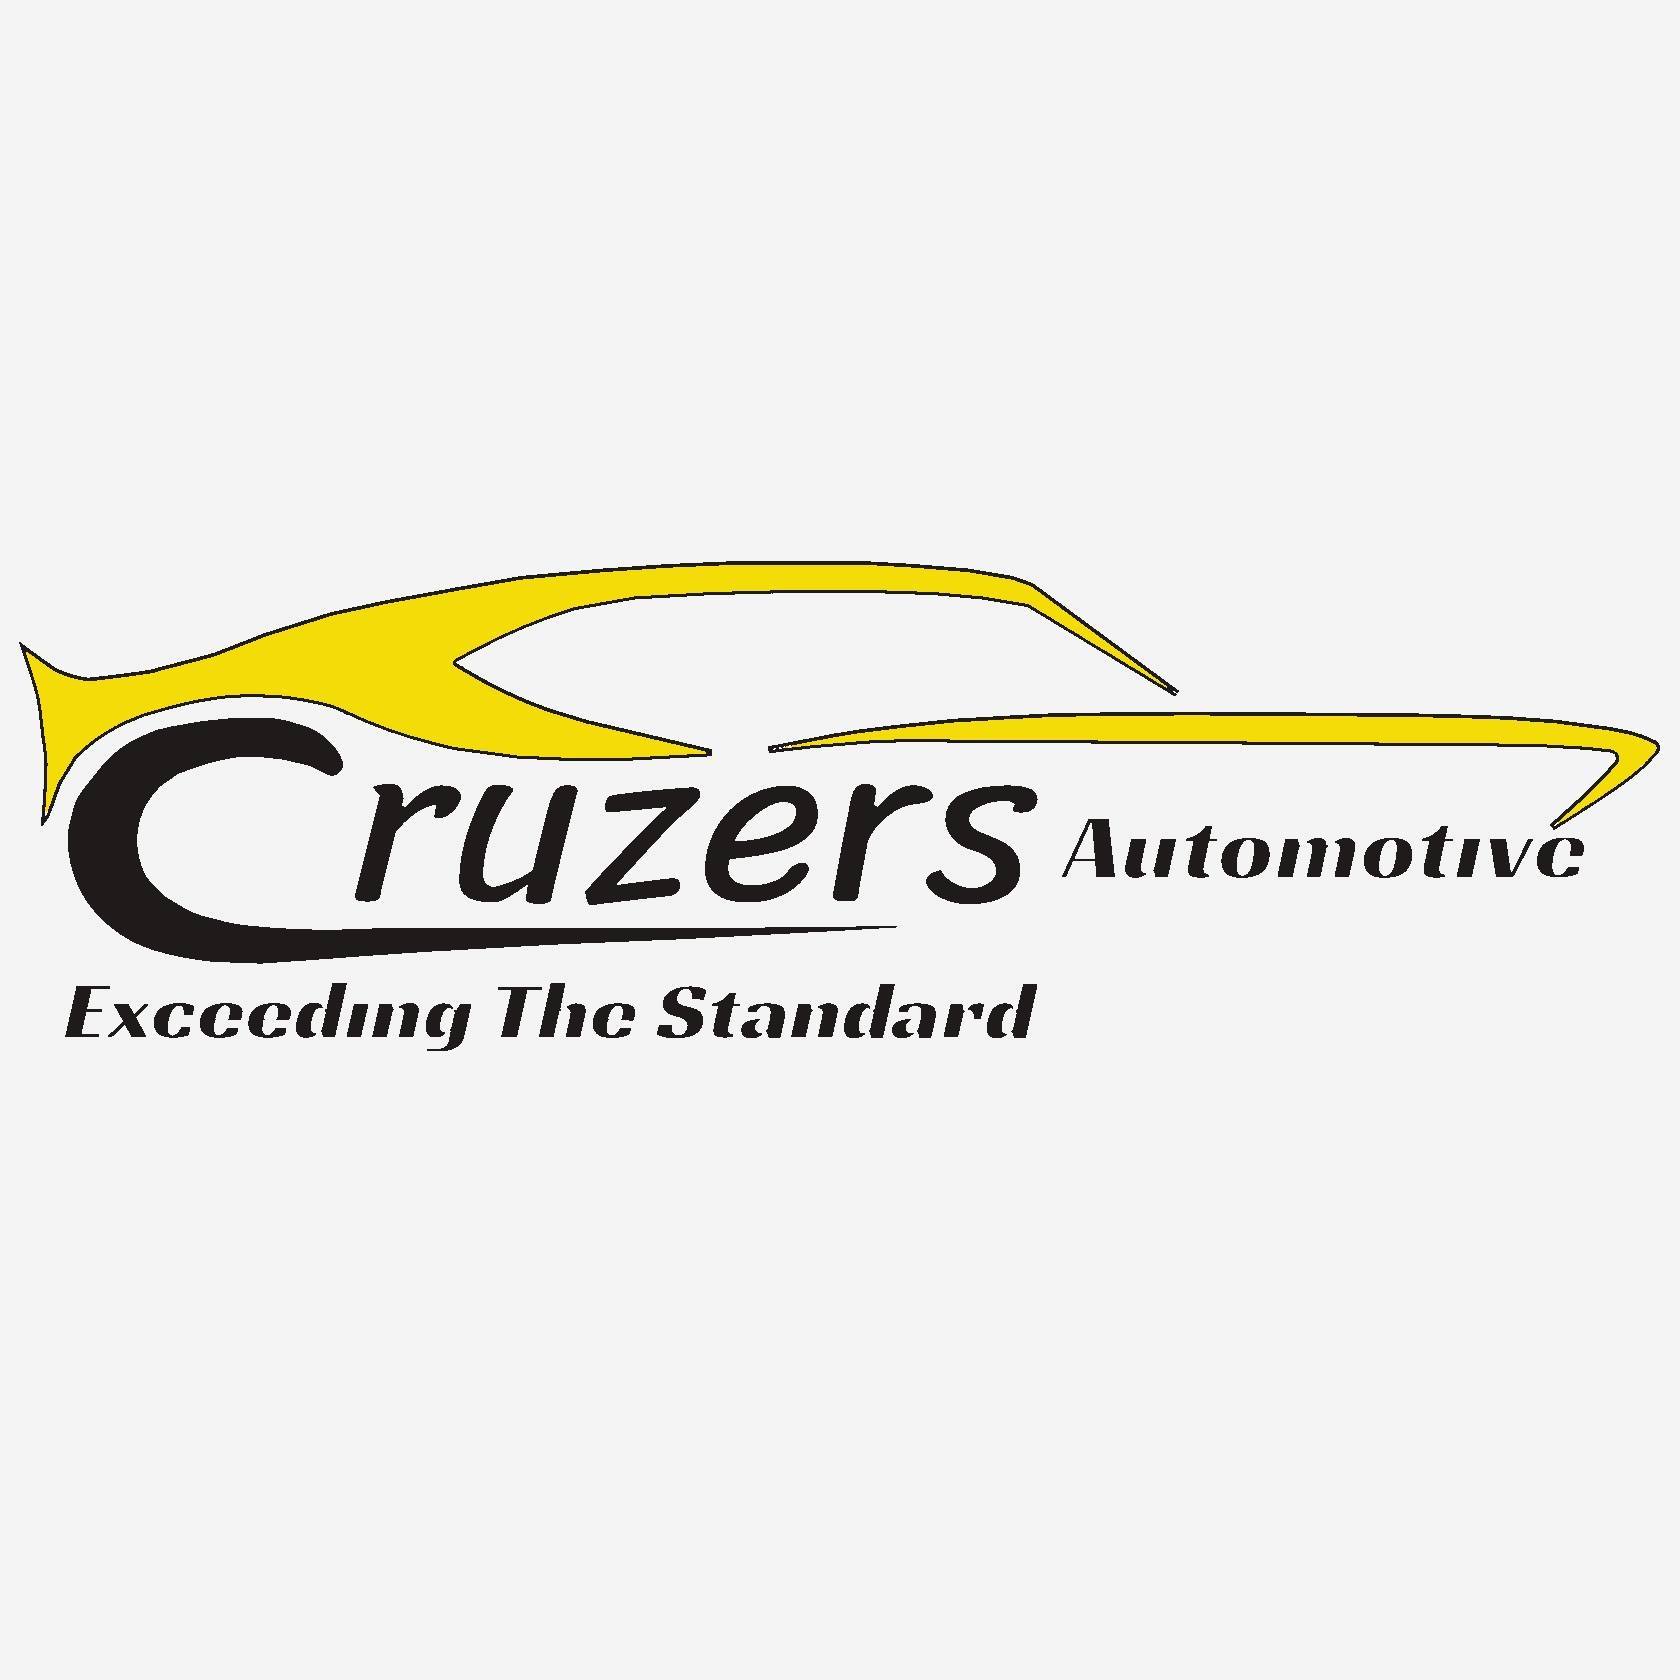 Cruzers Automotive